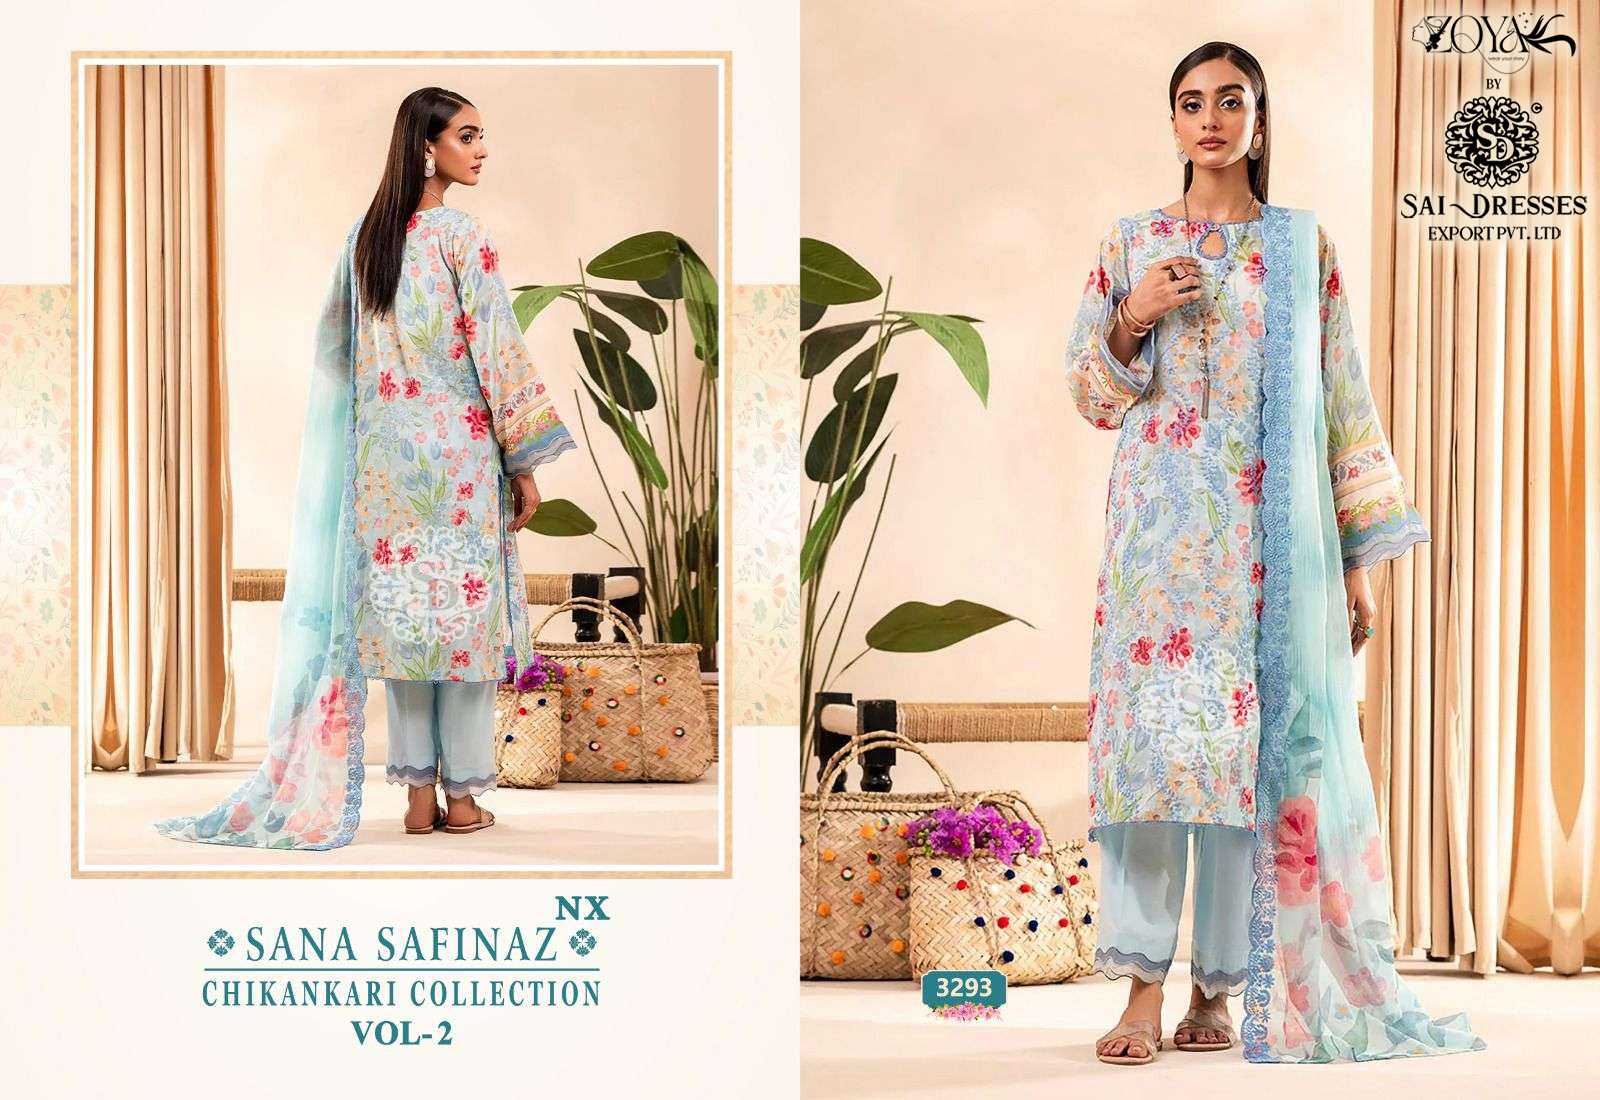 Mayur Creation Jaipuri Vol 5 Printed Cotton Dress Materials Wholesaler Surat